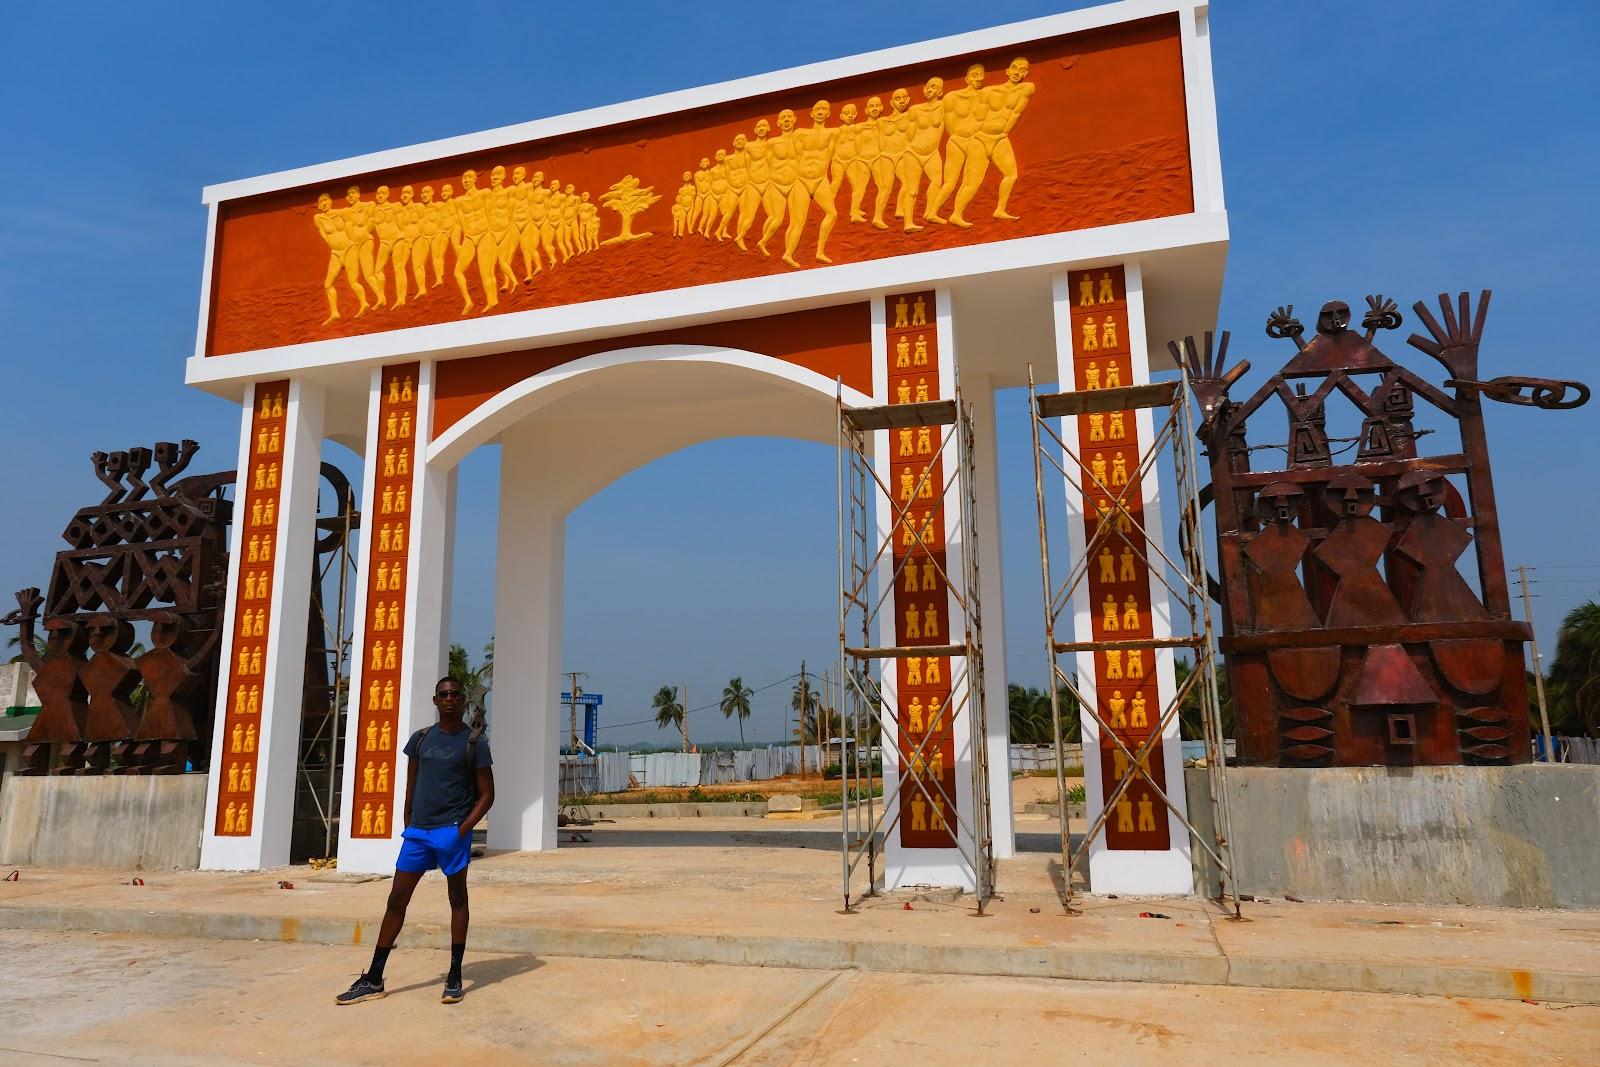 Sandee - Country / Ouidah